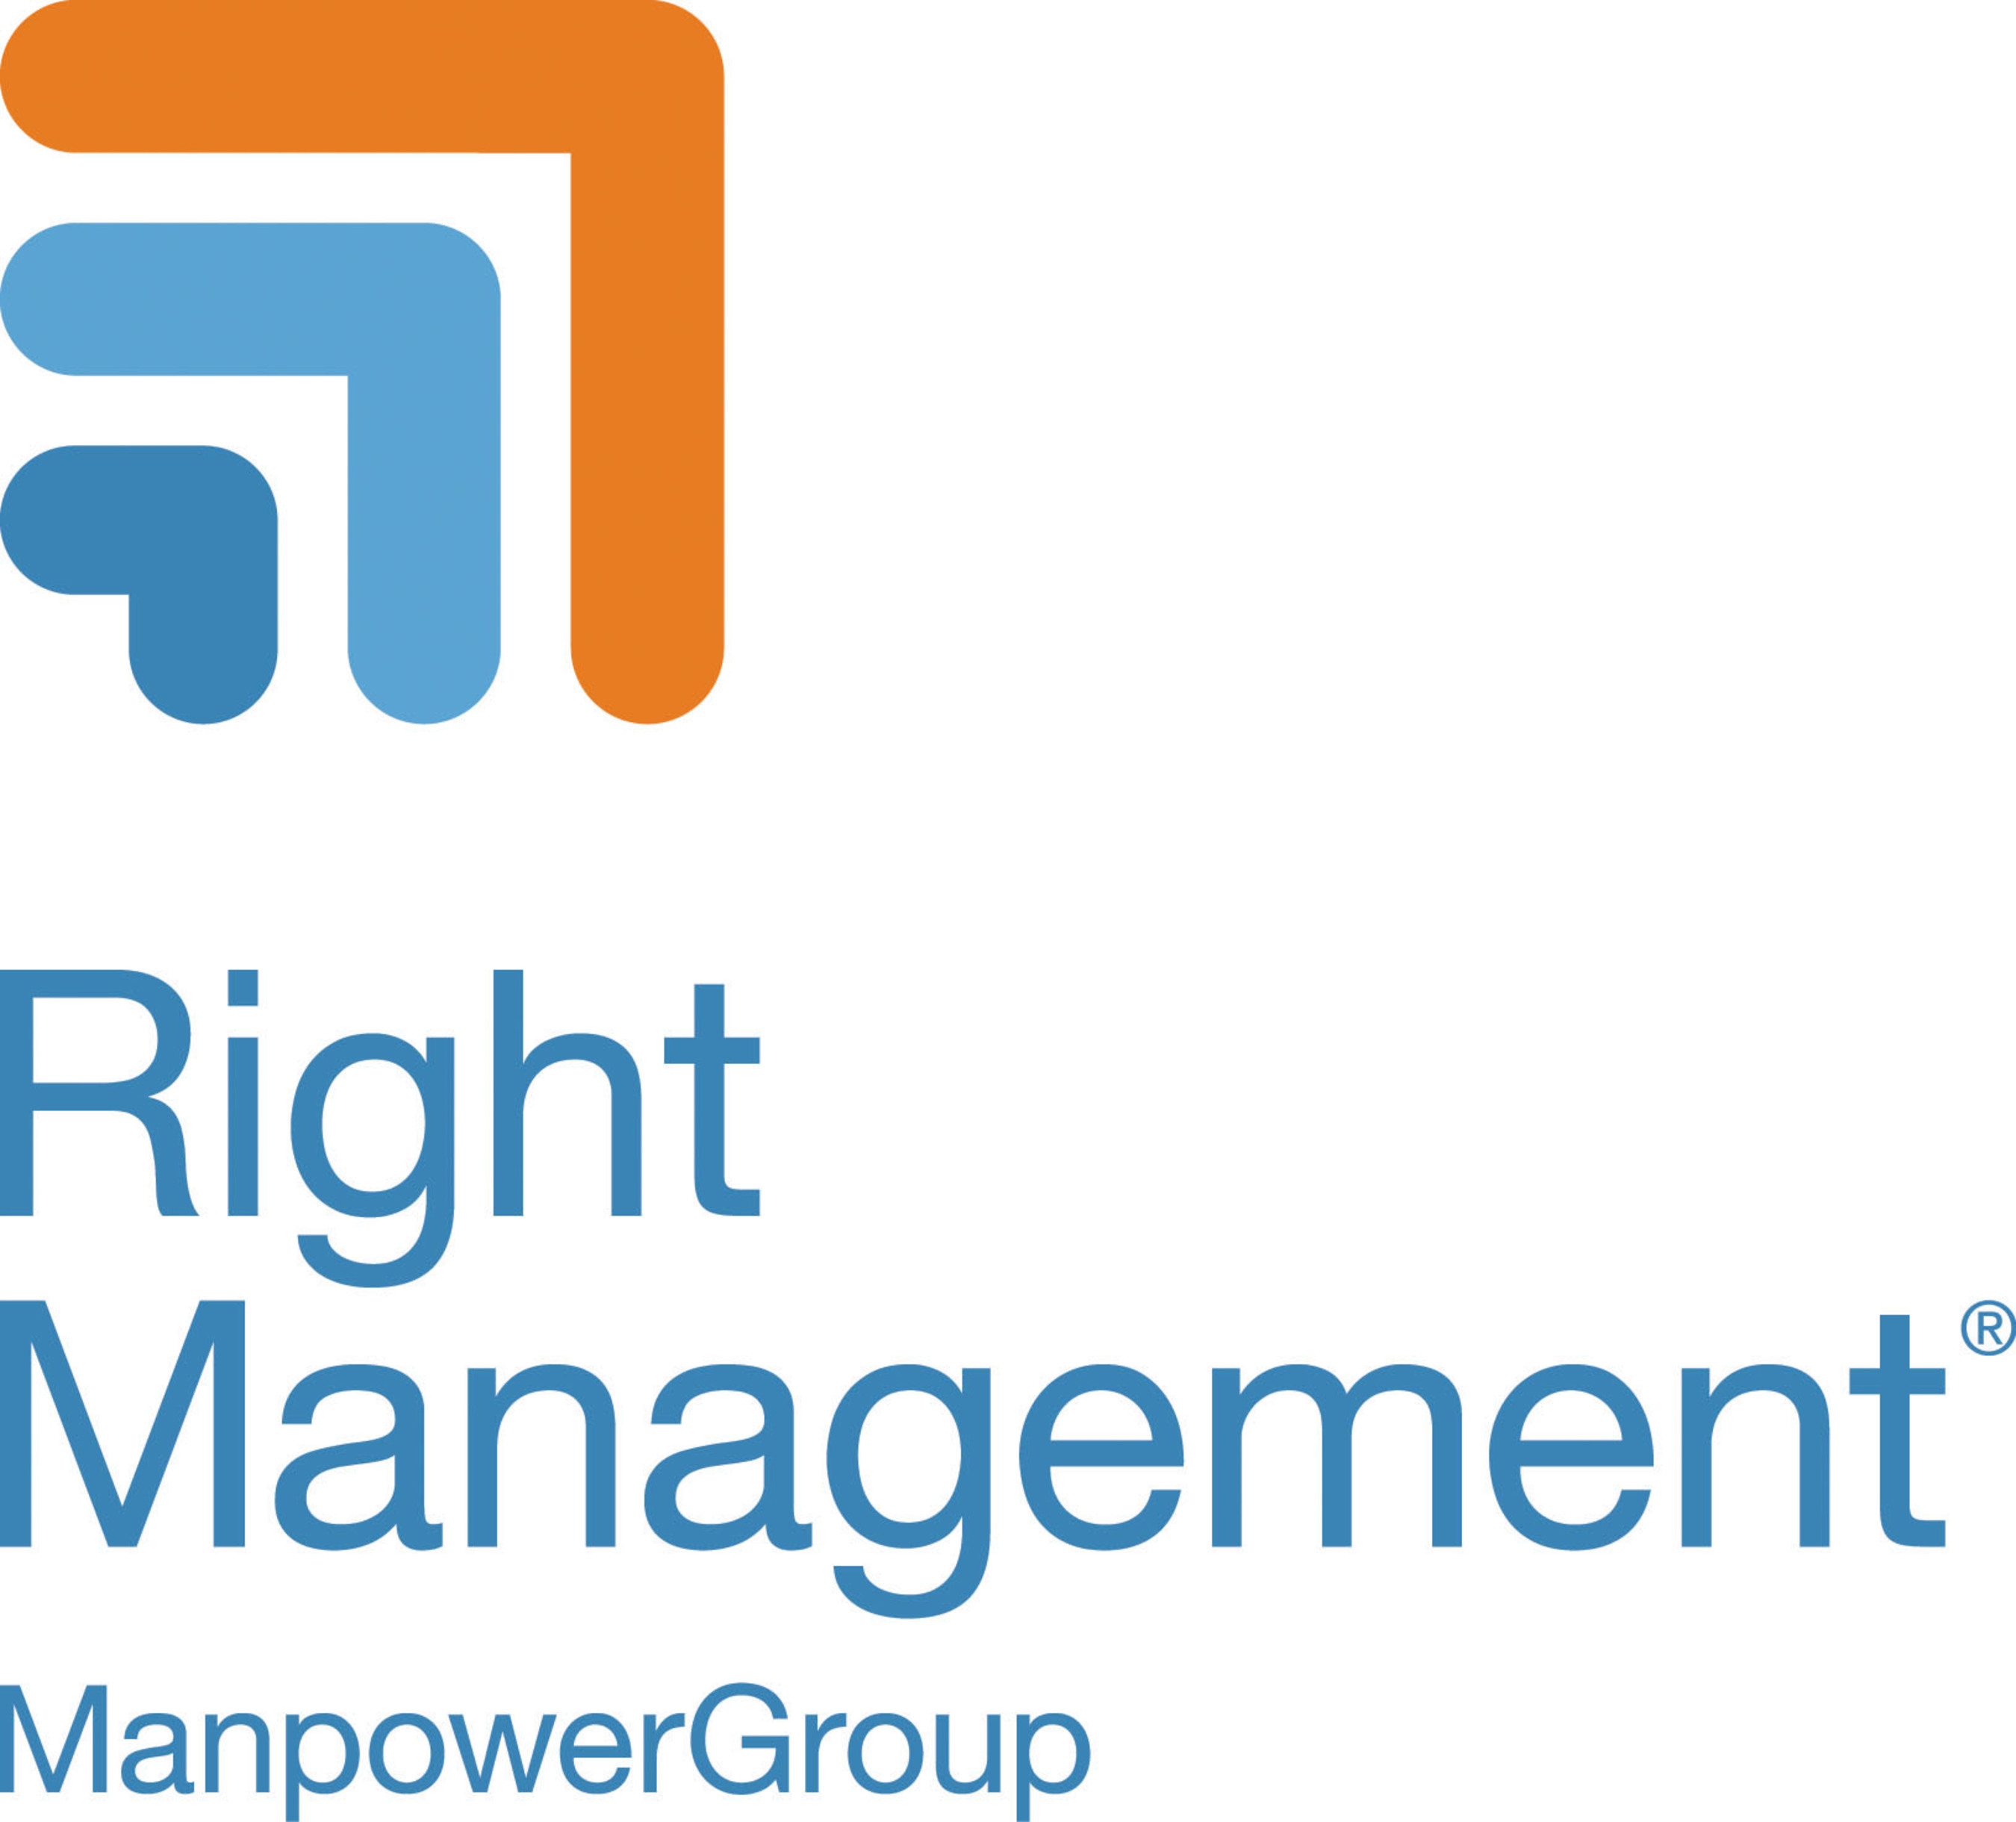 Right Management (PRNewsFoto/ManpowerGroup) (PRNewsFoto/MANPOWERGROUP)